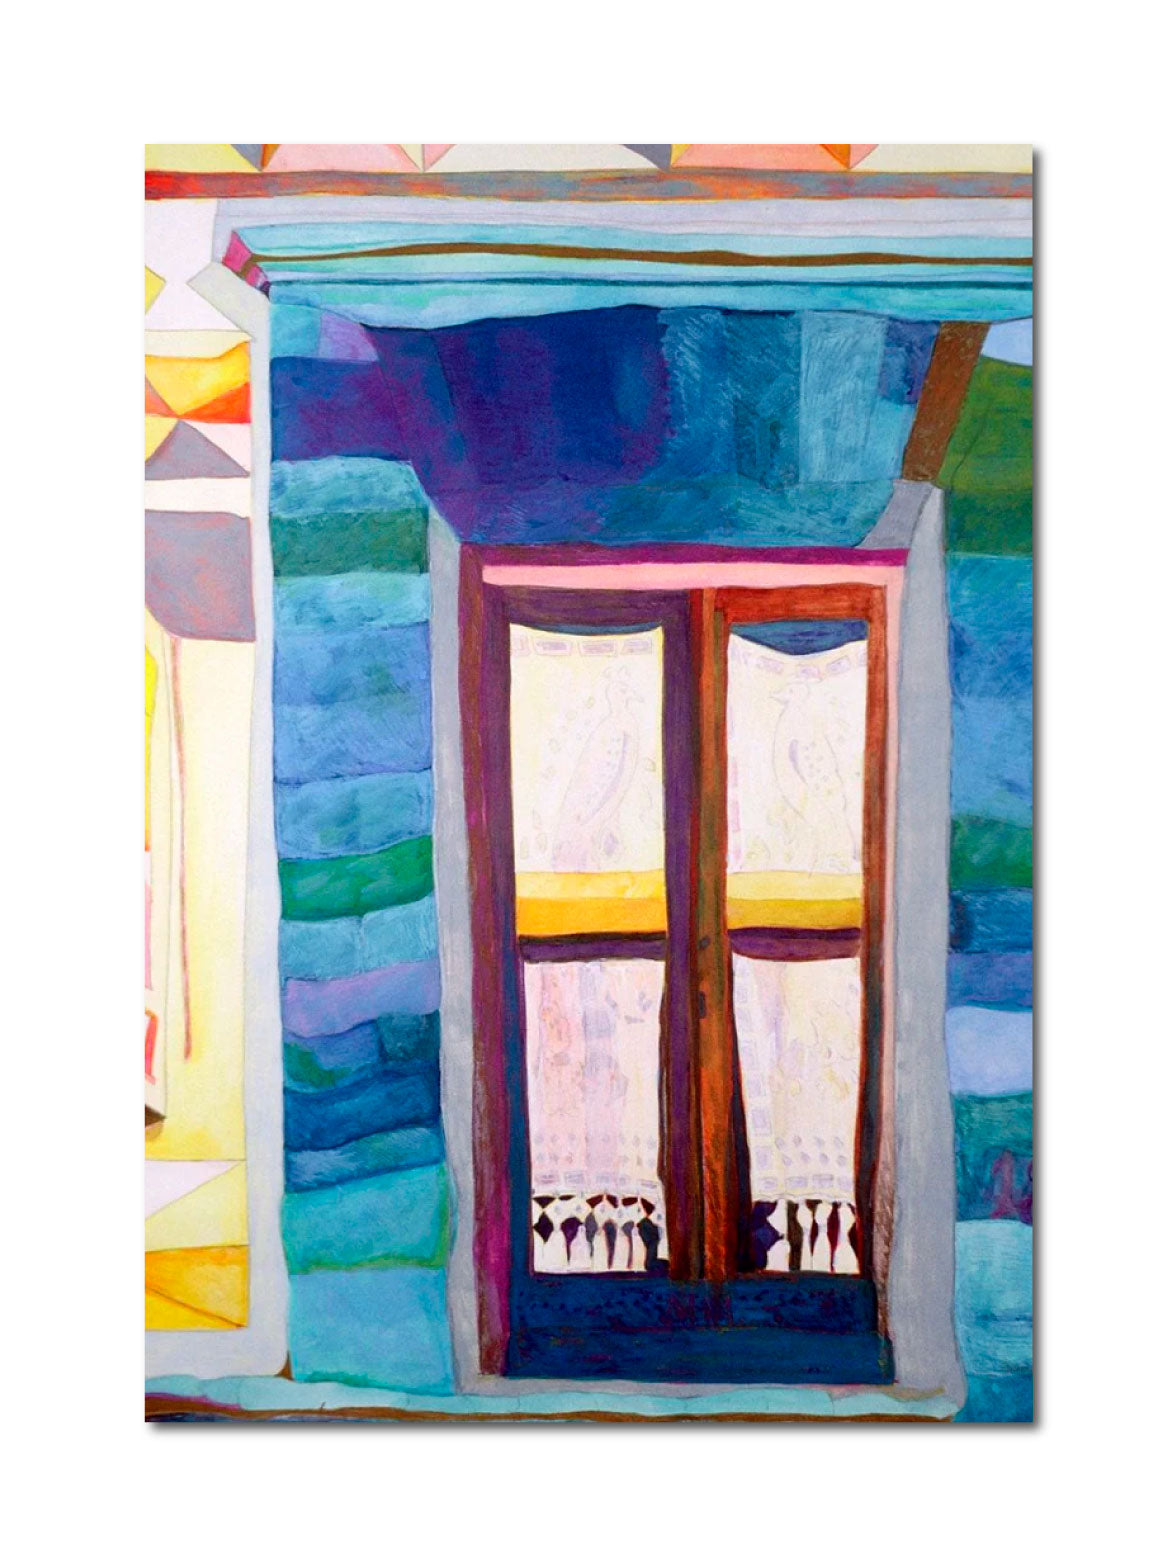 'PEACOCK WINDOW' - Watercolor, Gouache, Pencil on Paper